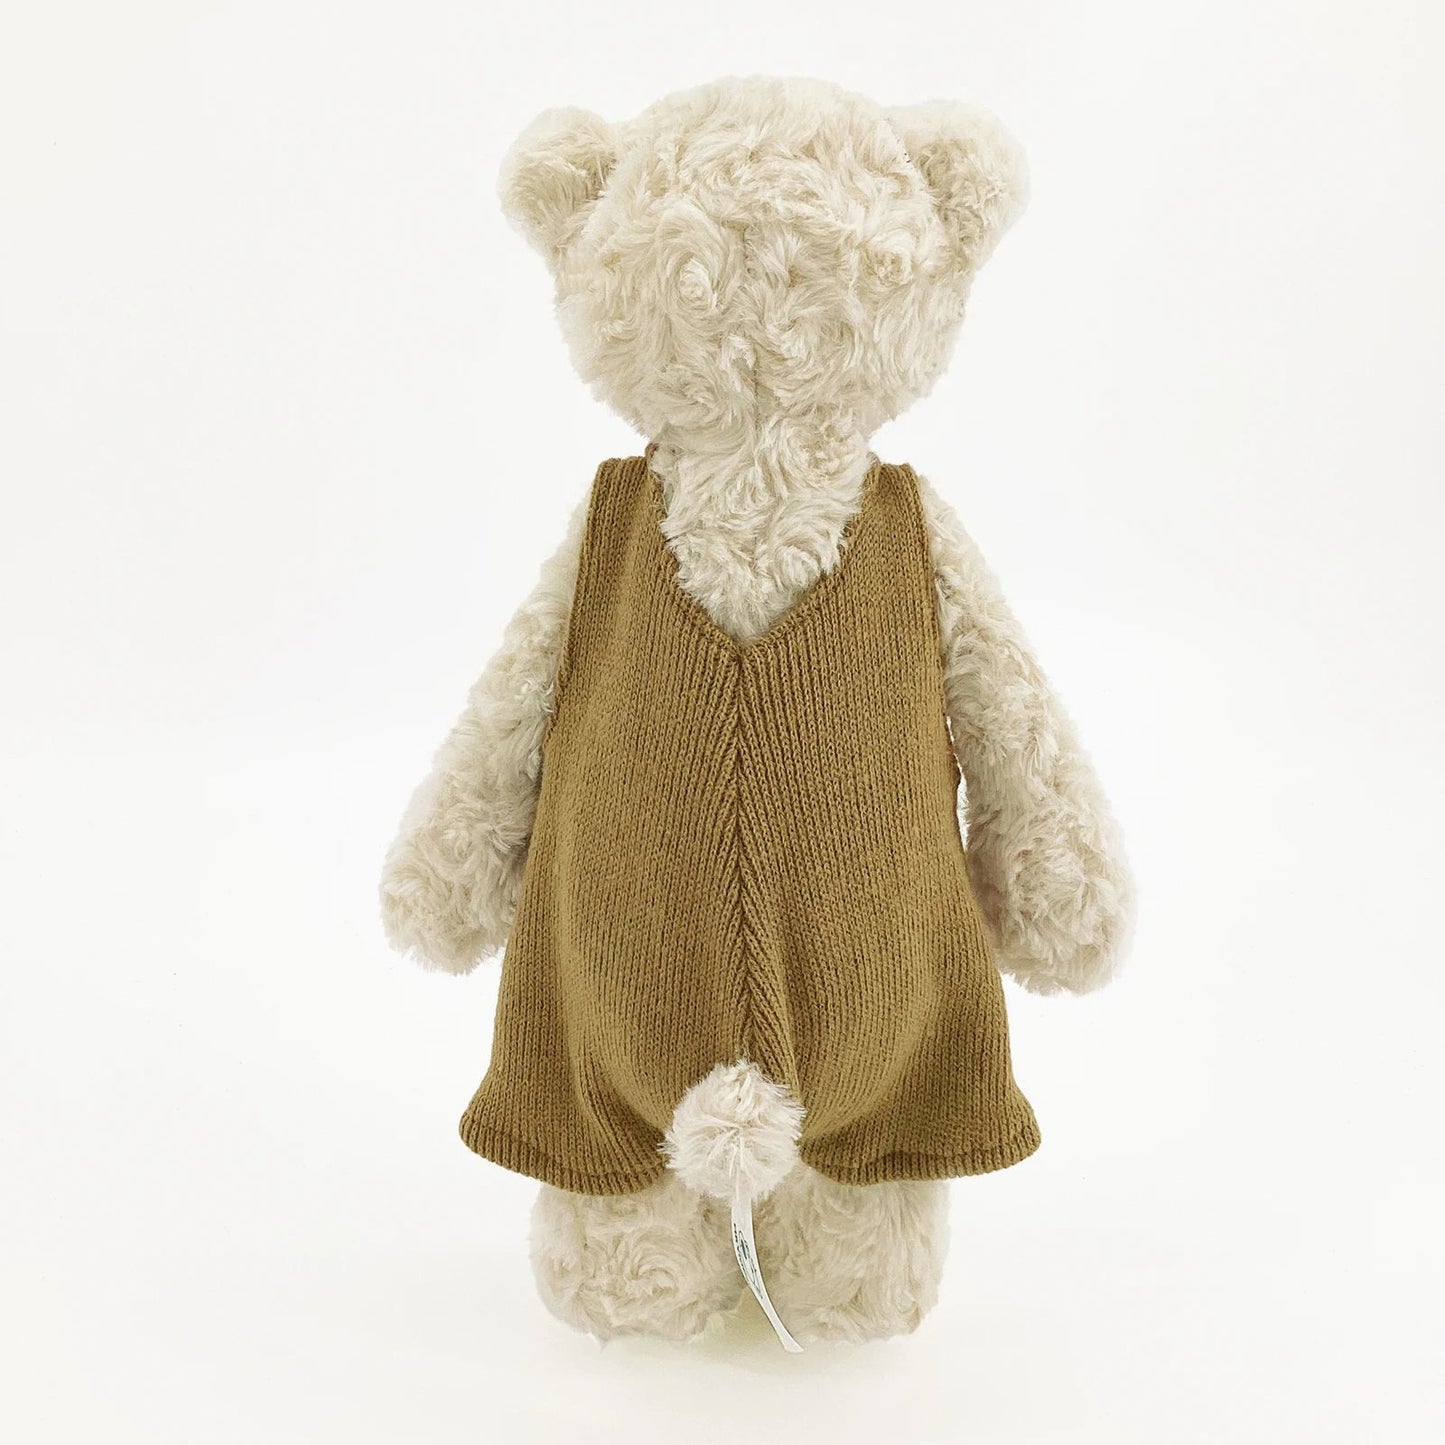 New Arrive 34CM Lovely Teddy Bear Plush Toys Stuffed Soft Animal With ToylandEU.com Toyland EU